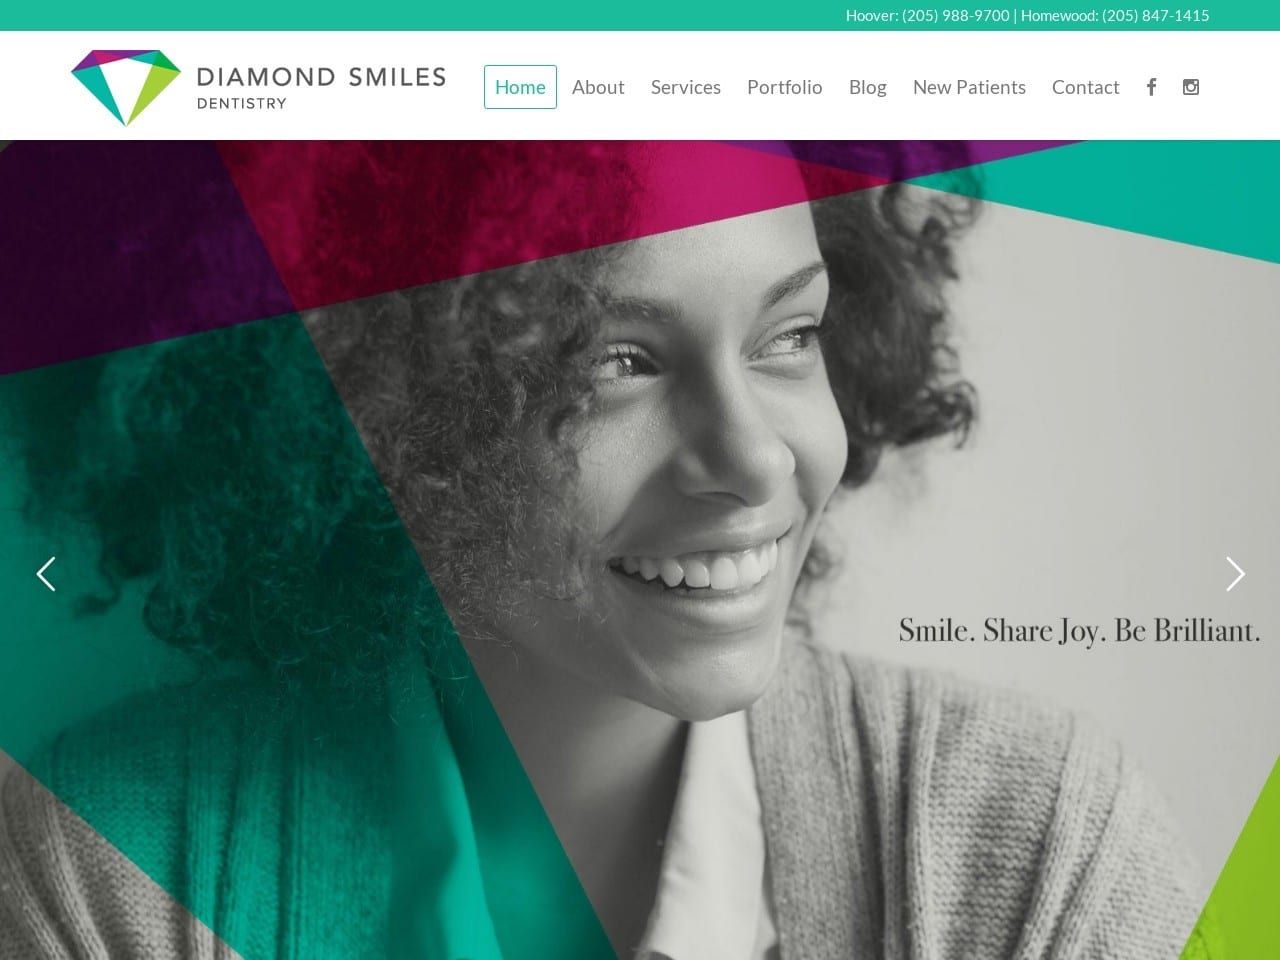 Diamond Smiles Website Screenshot from diamondsmiles.com